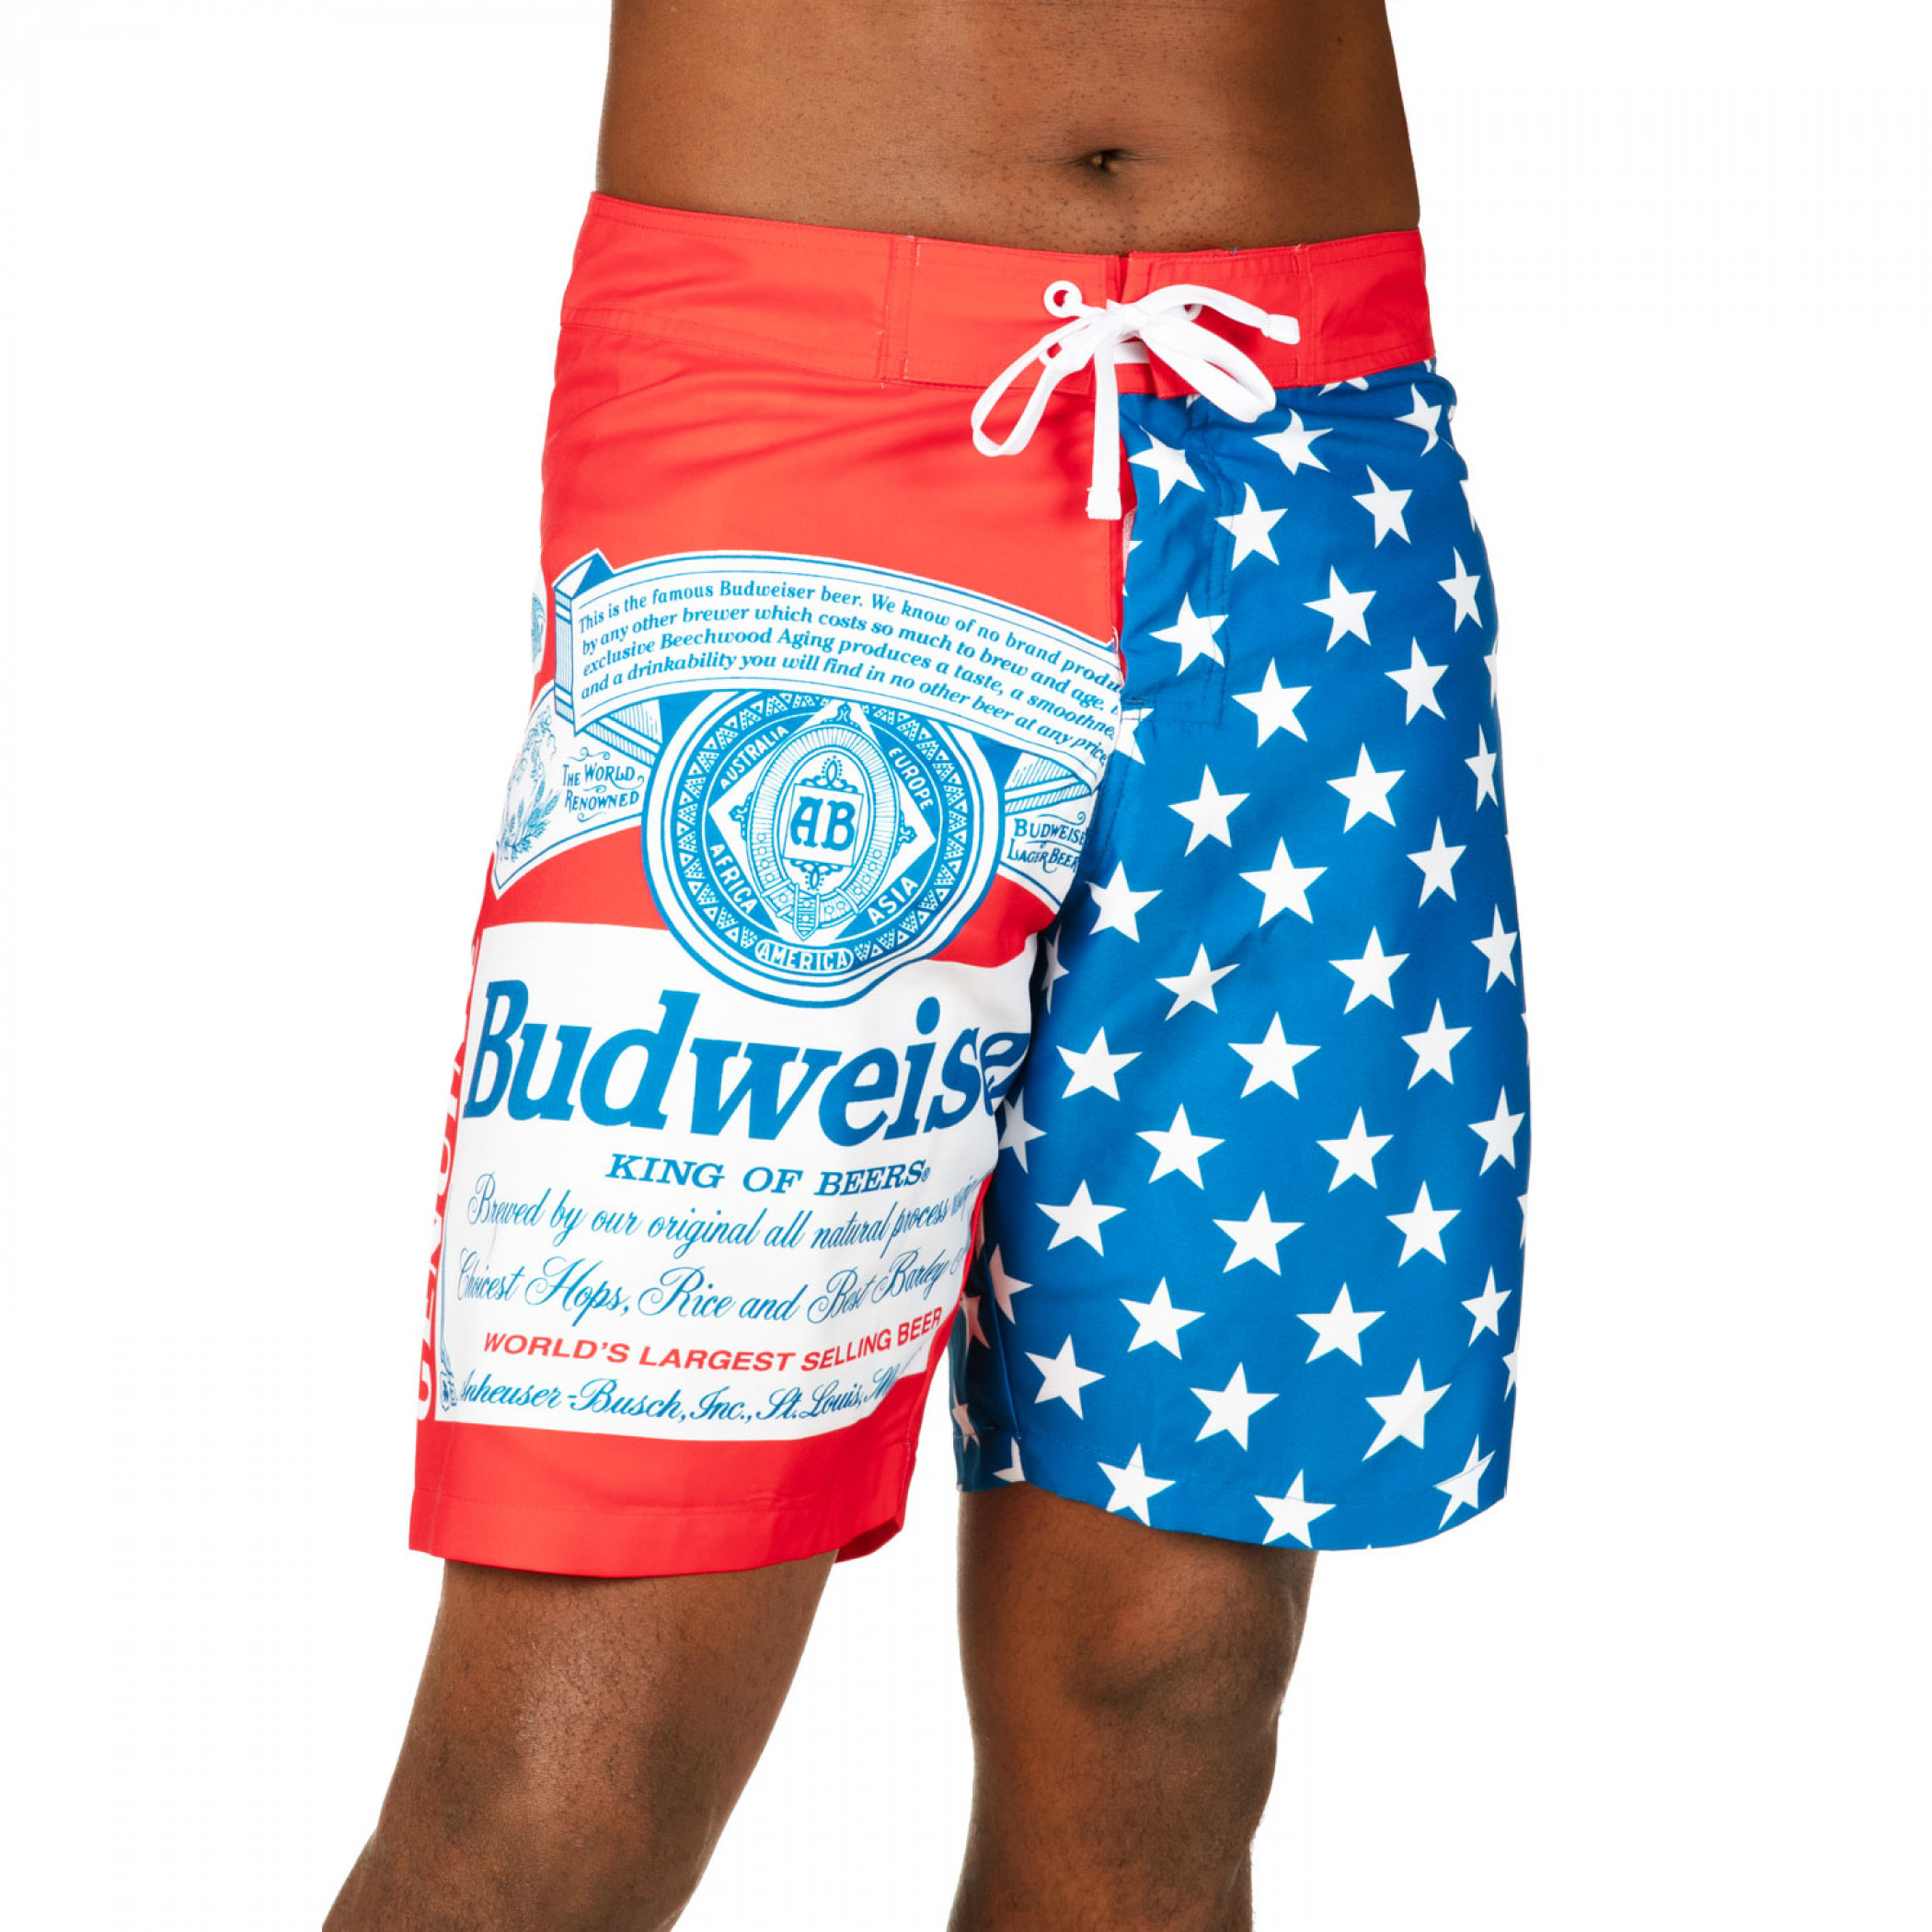 Men's Budweiser Beer Board Shorts Swim Trunk Swimwear Red Vintage American Bud